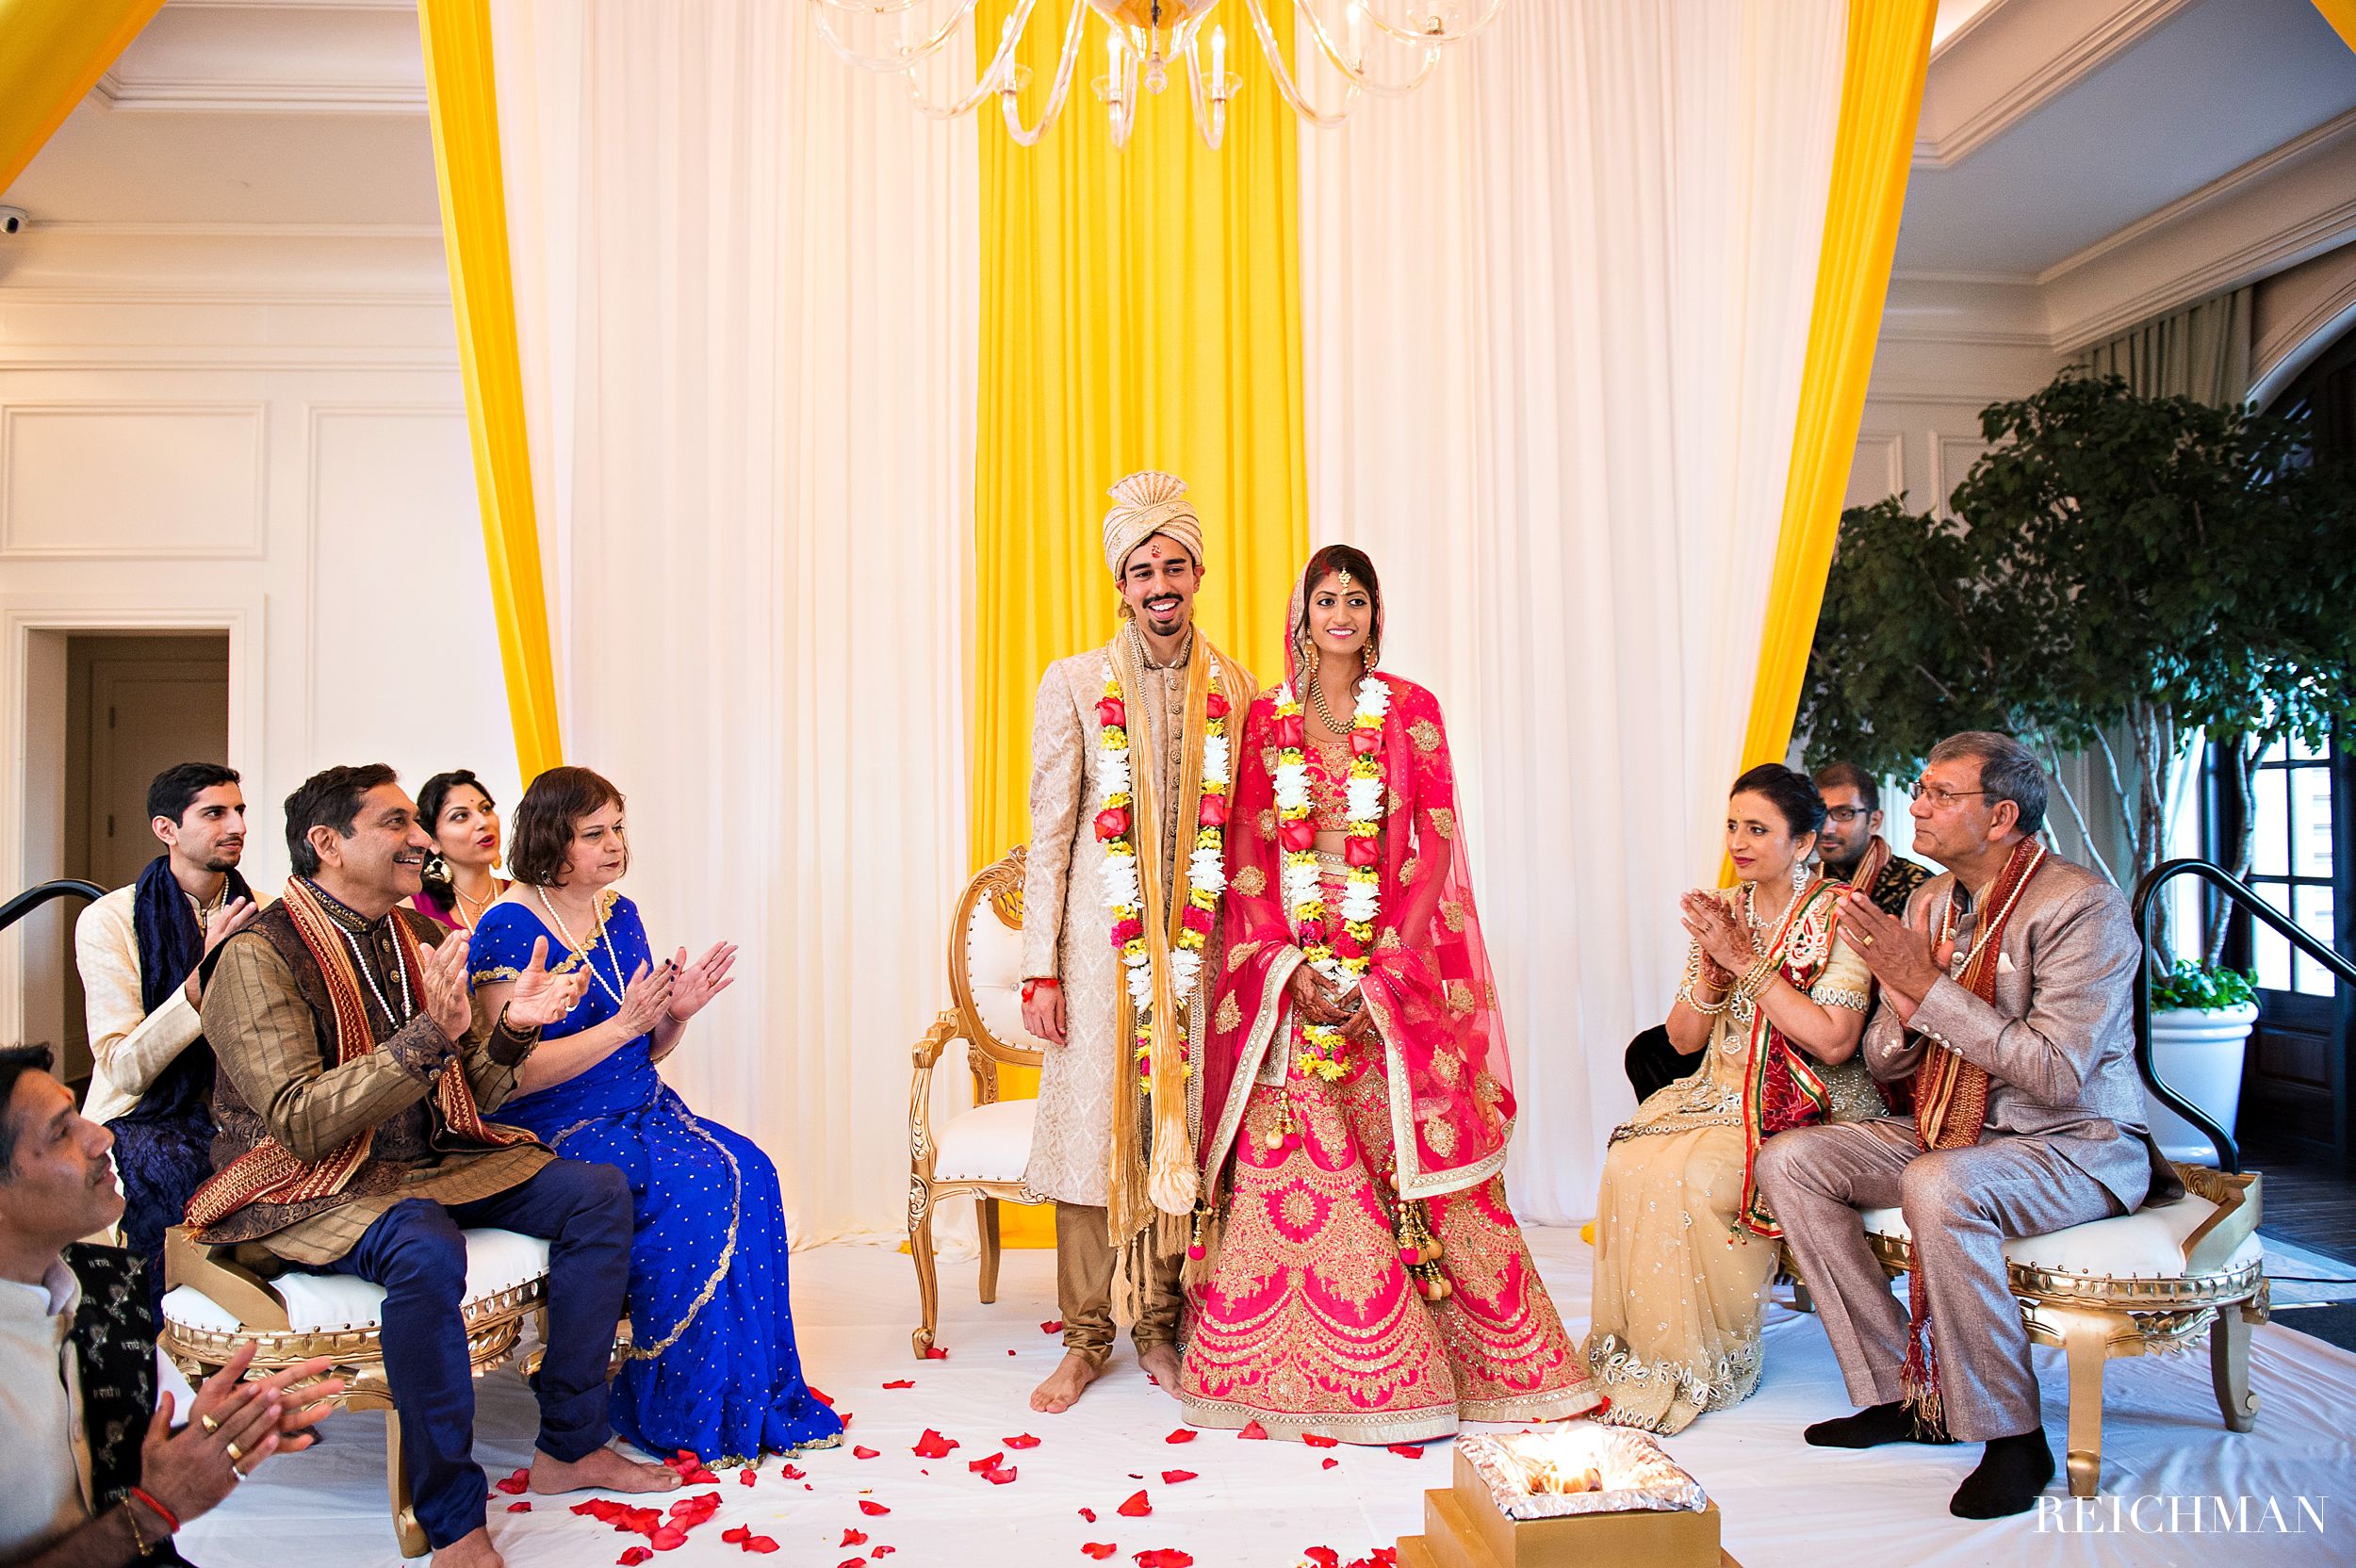 066st-regis-atlanta-hindu-wedding-066